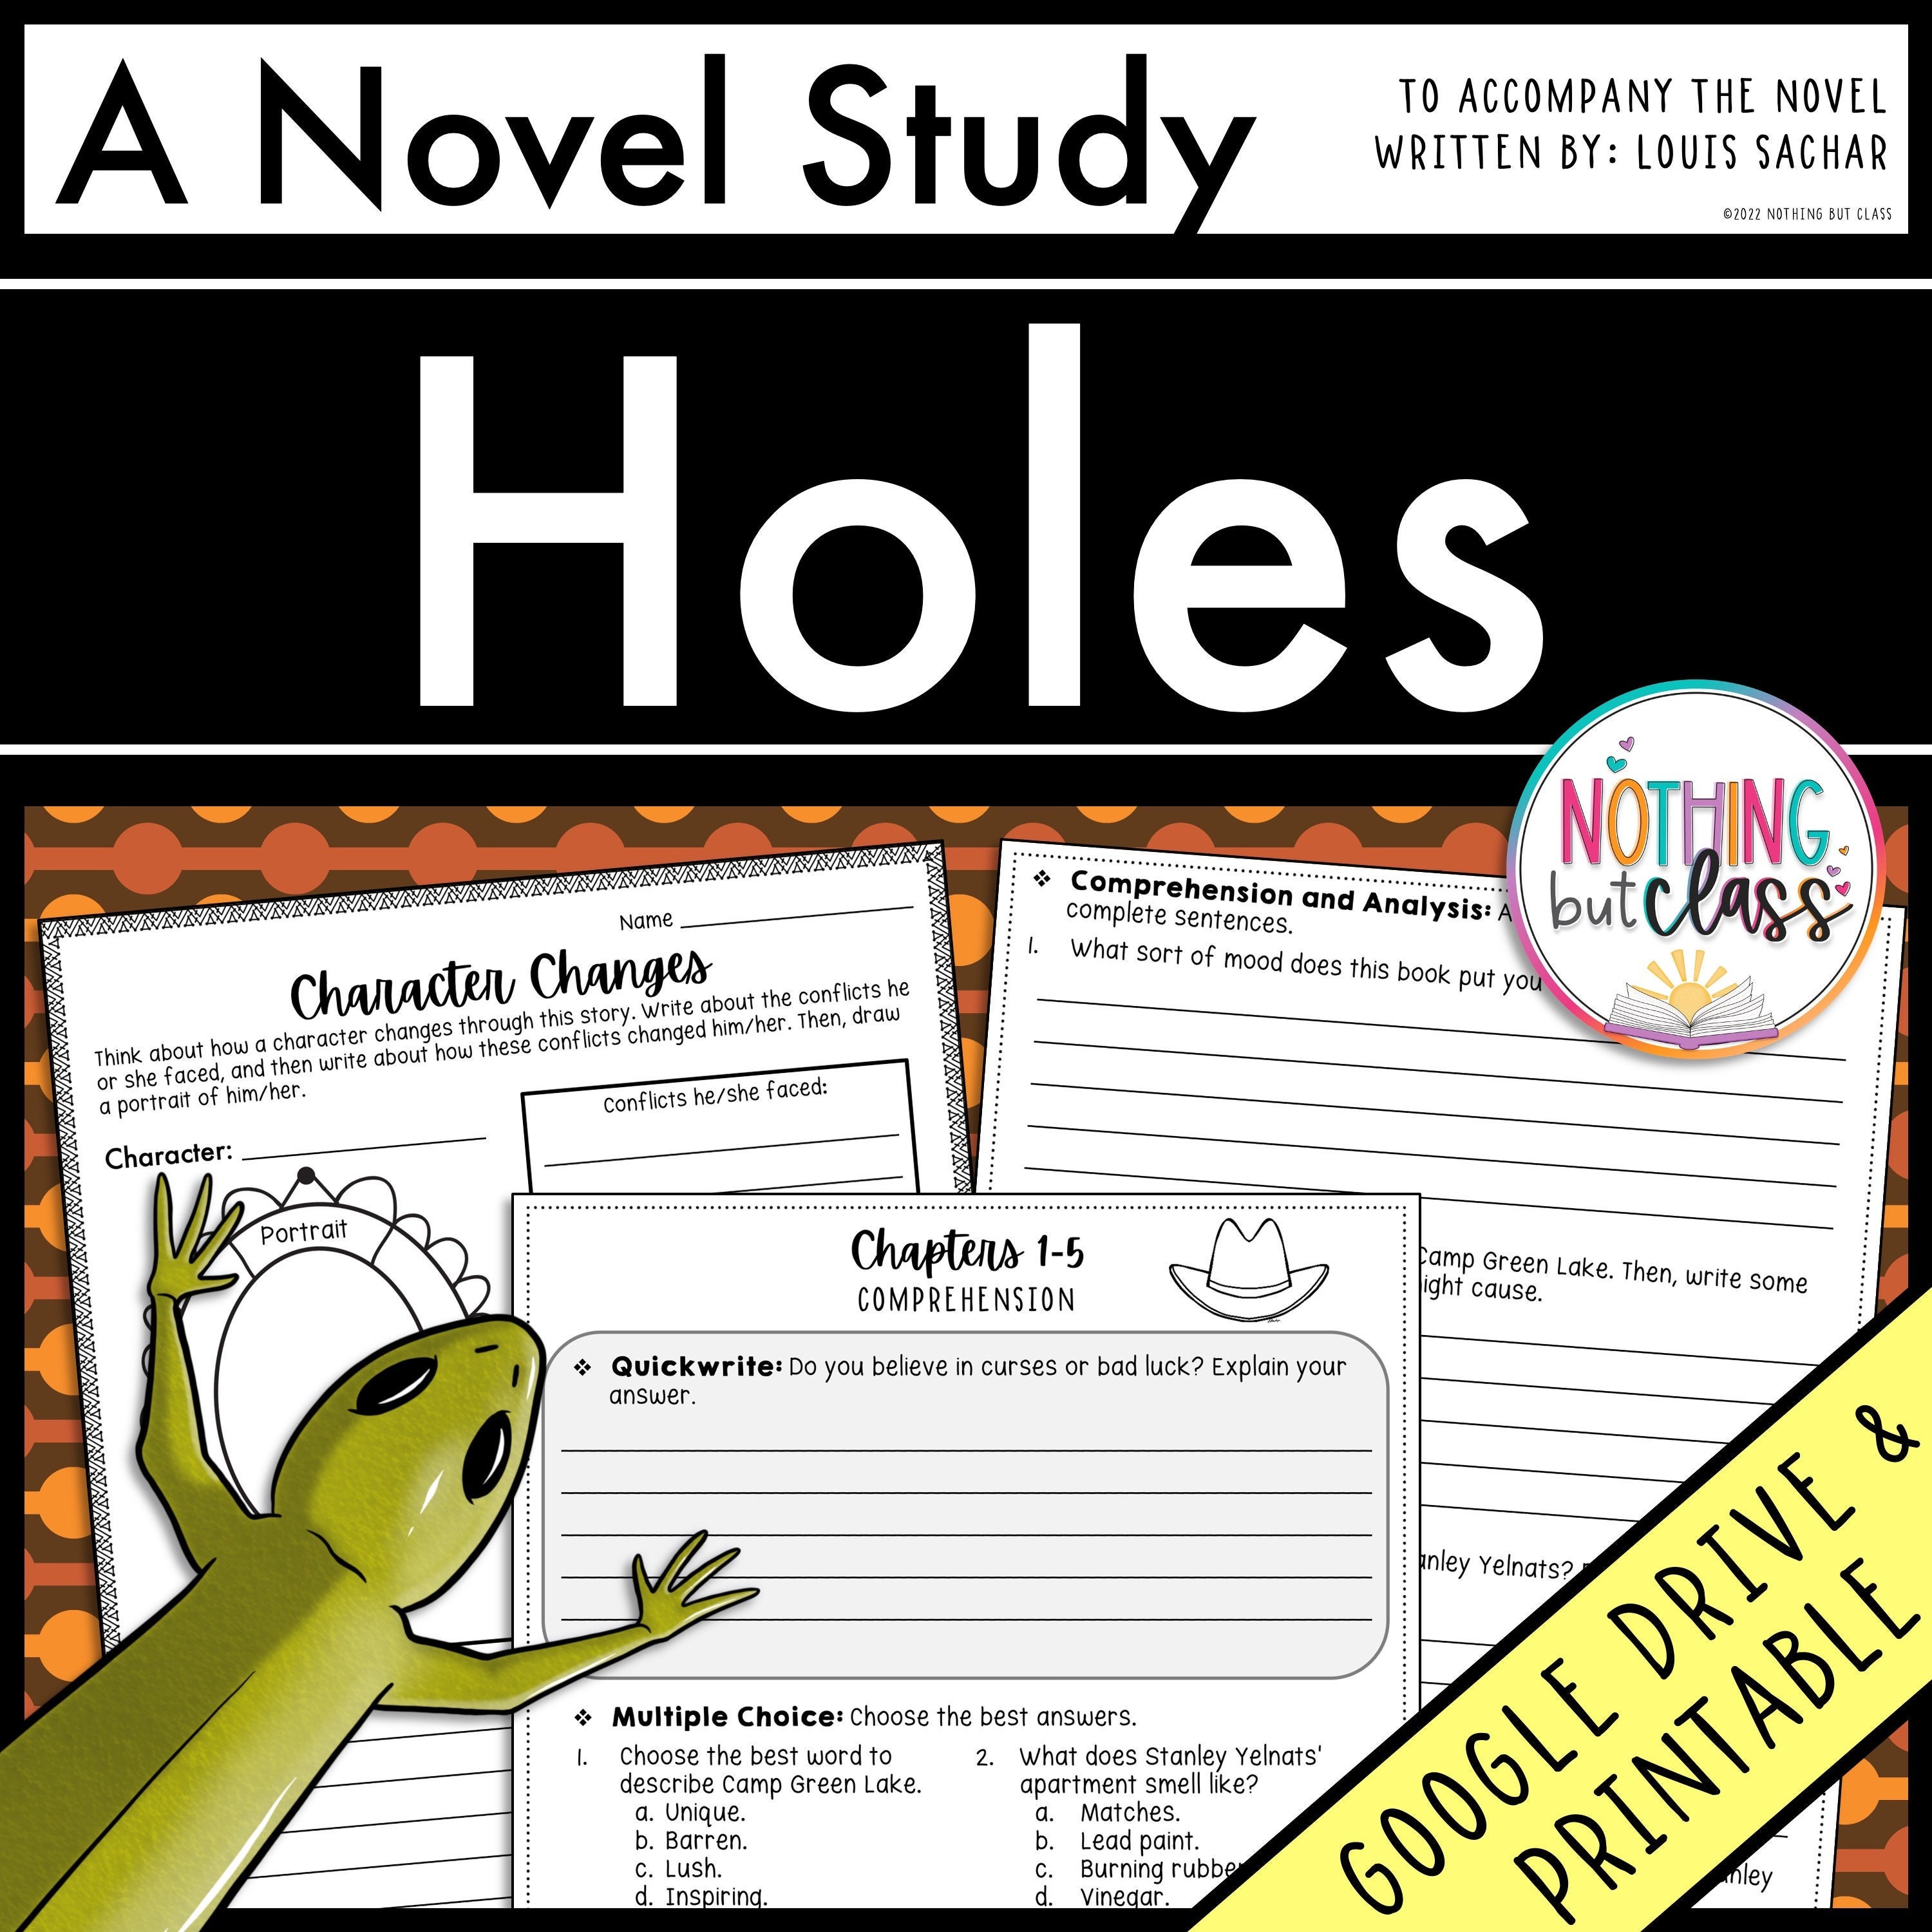 Holes Unit Plan - Louis Sachar Novel Study Reading Unit - Digital